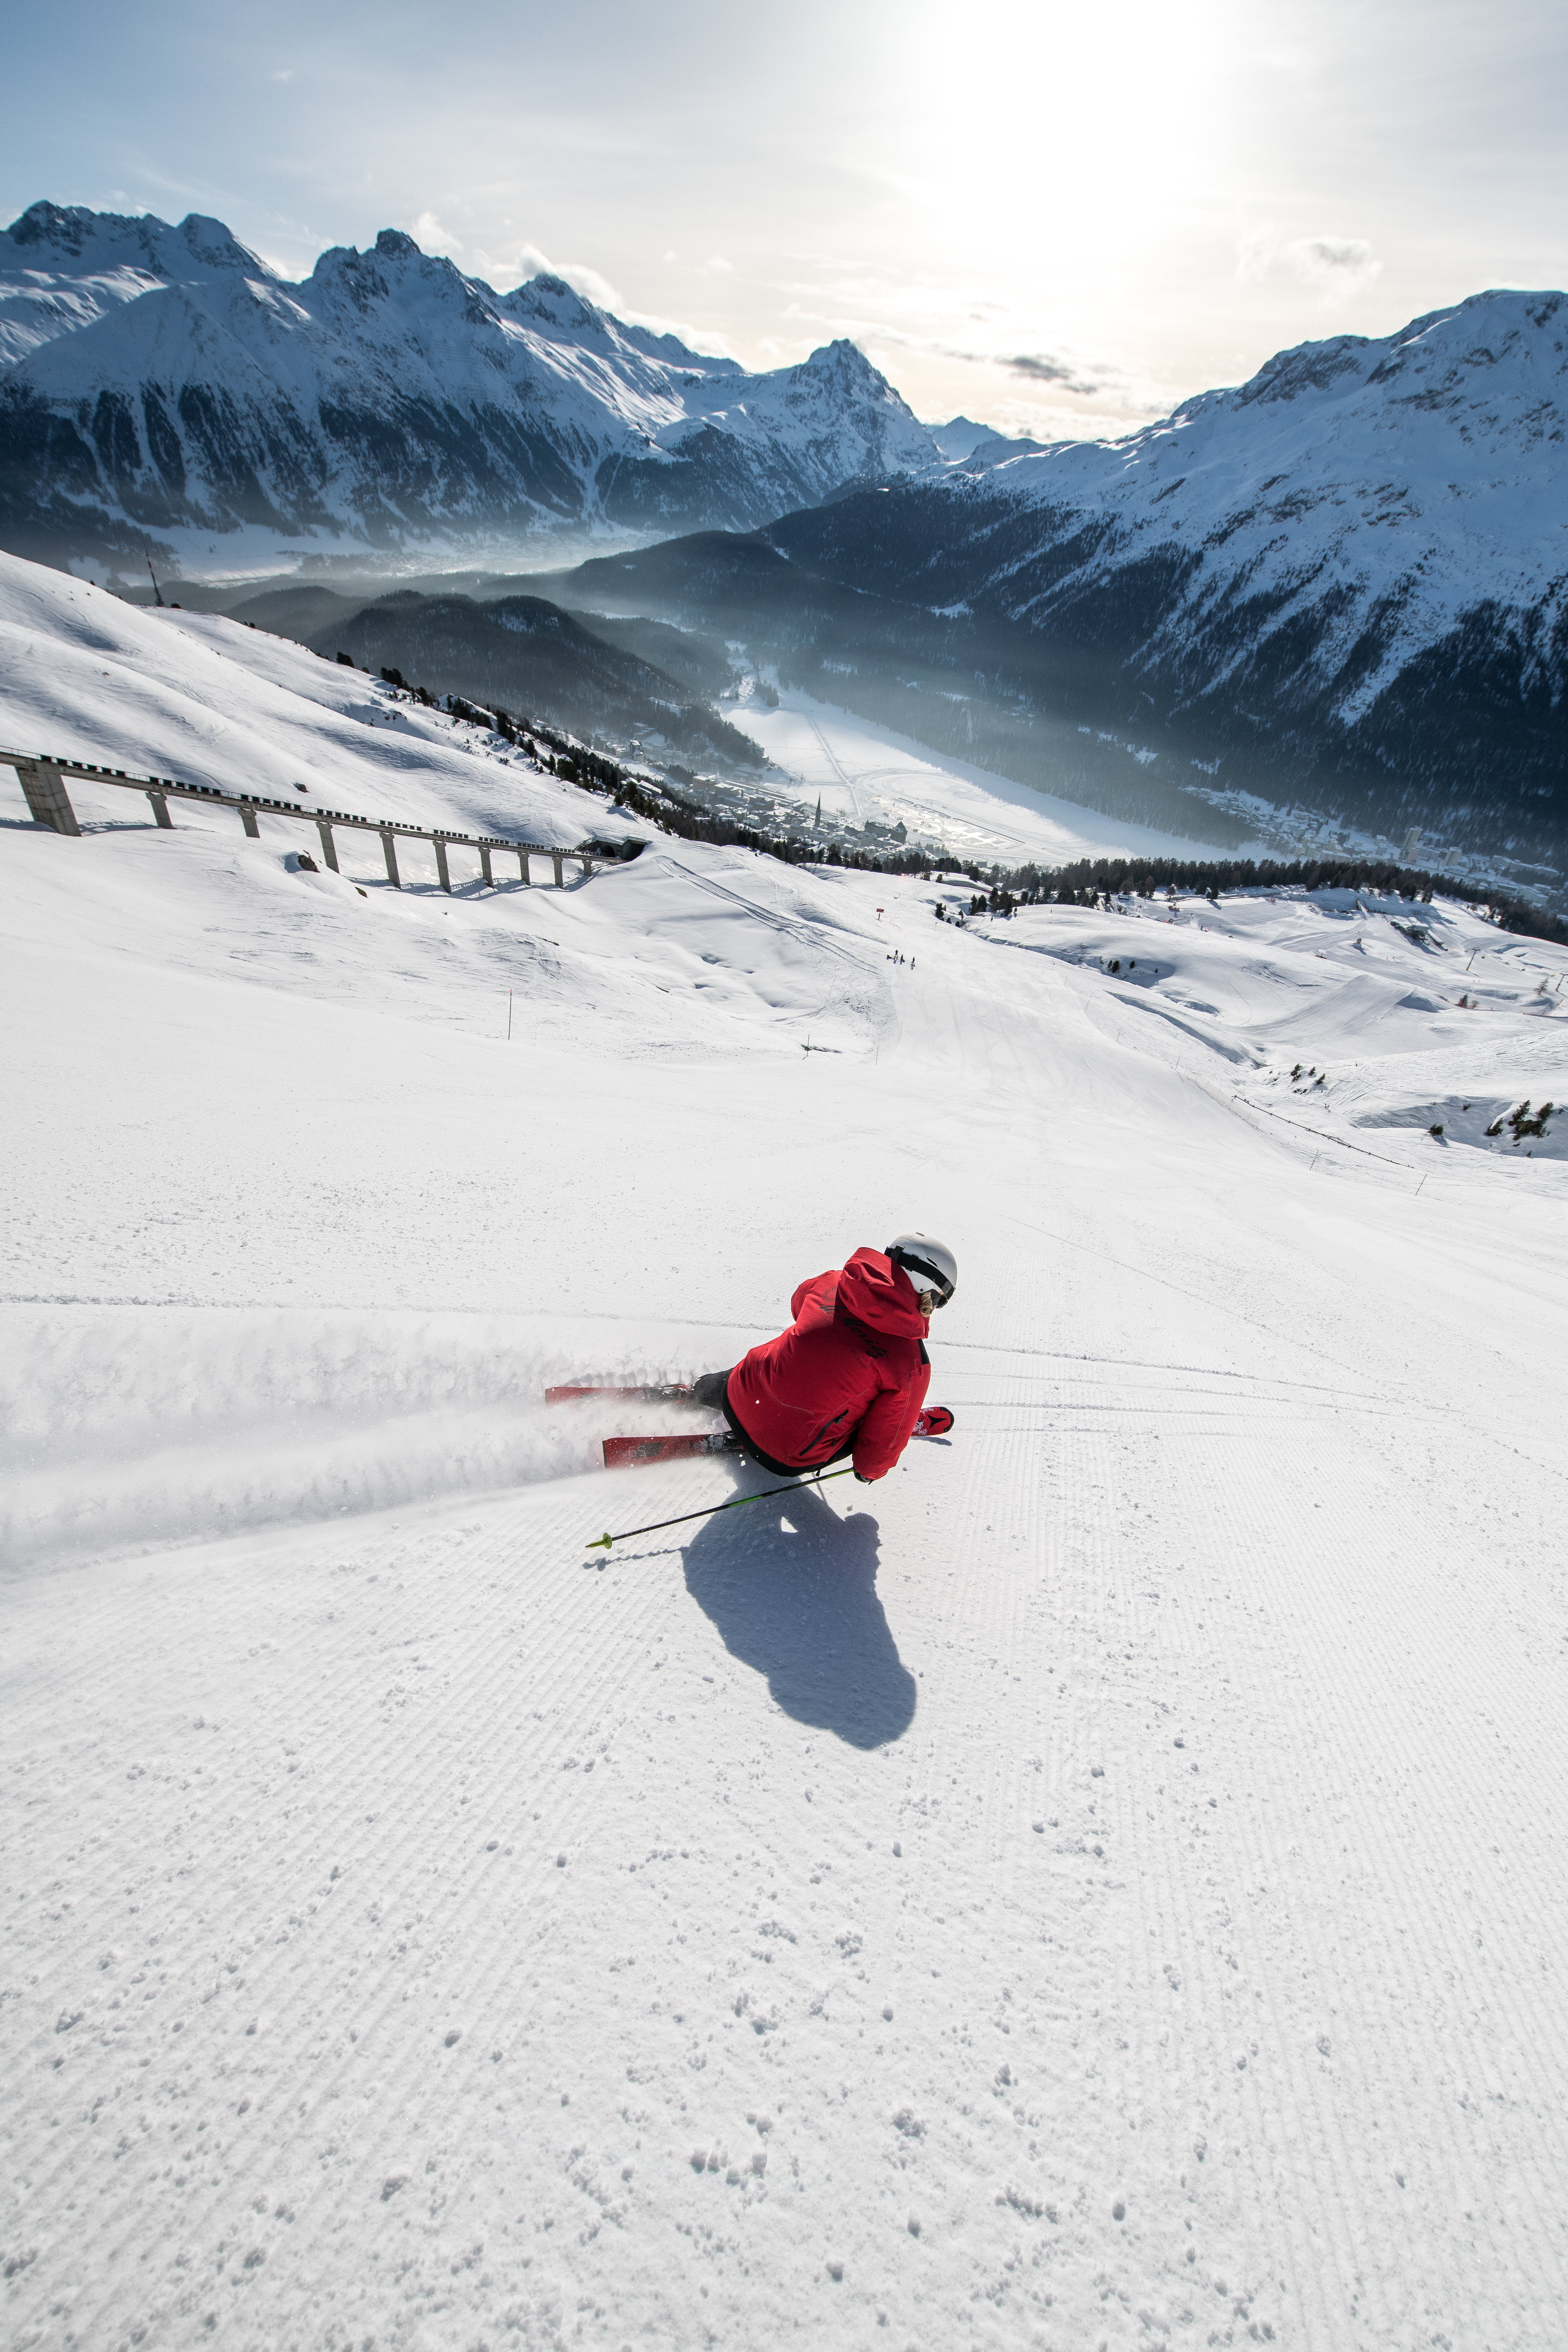 The Red Legends Skischool St. Moritz - Sport spirit since 1929